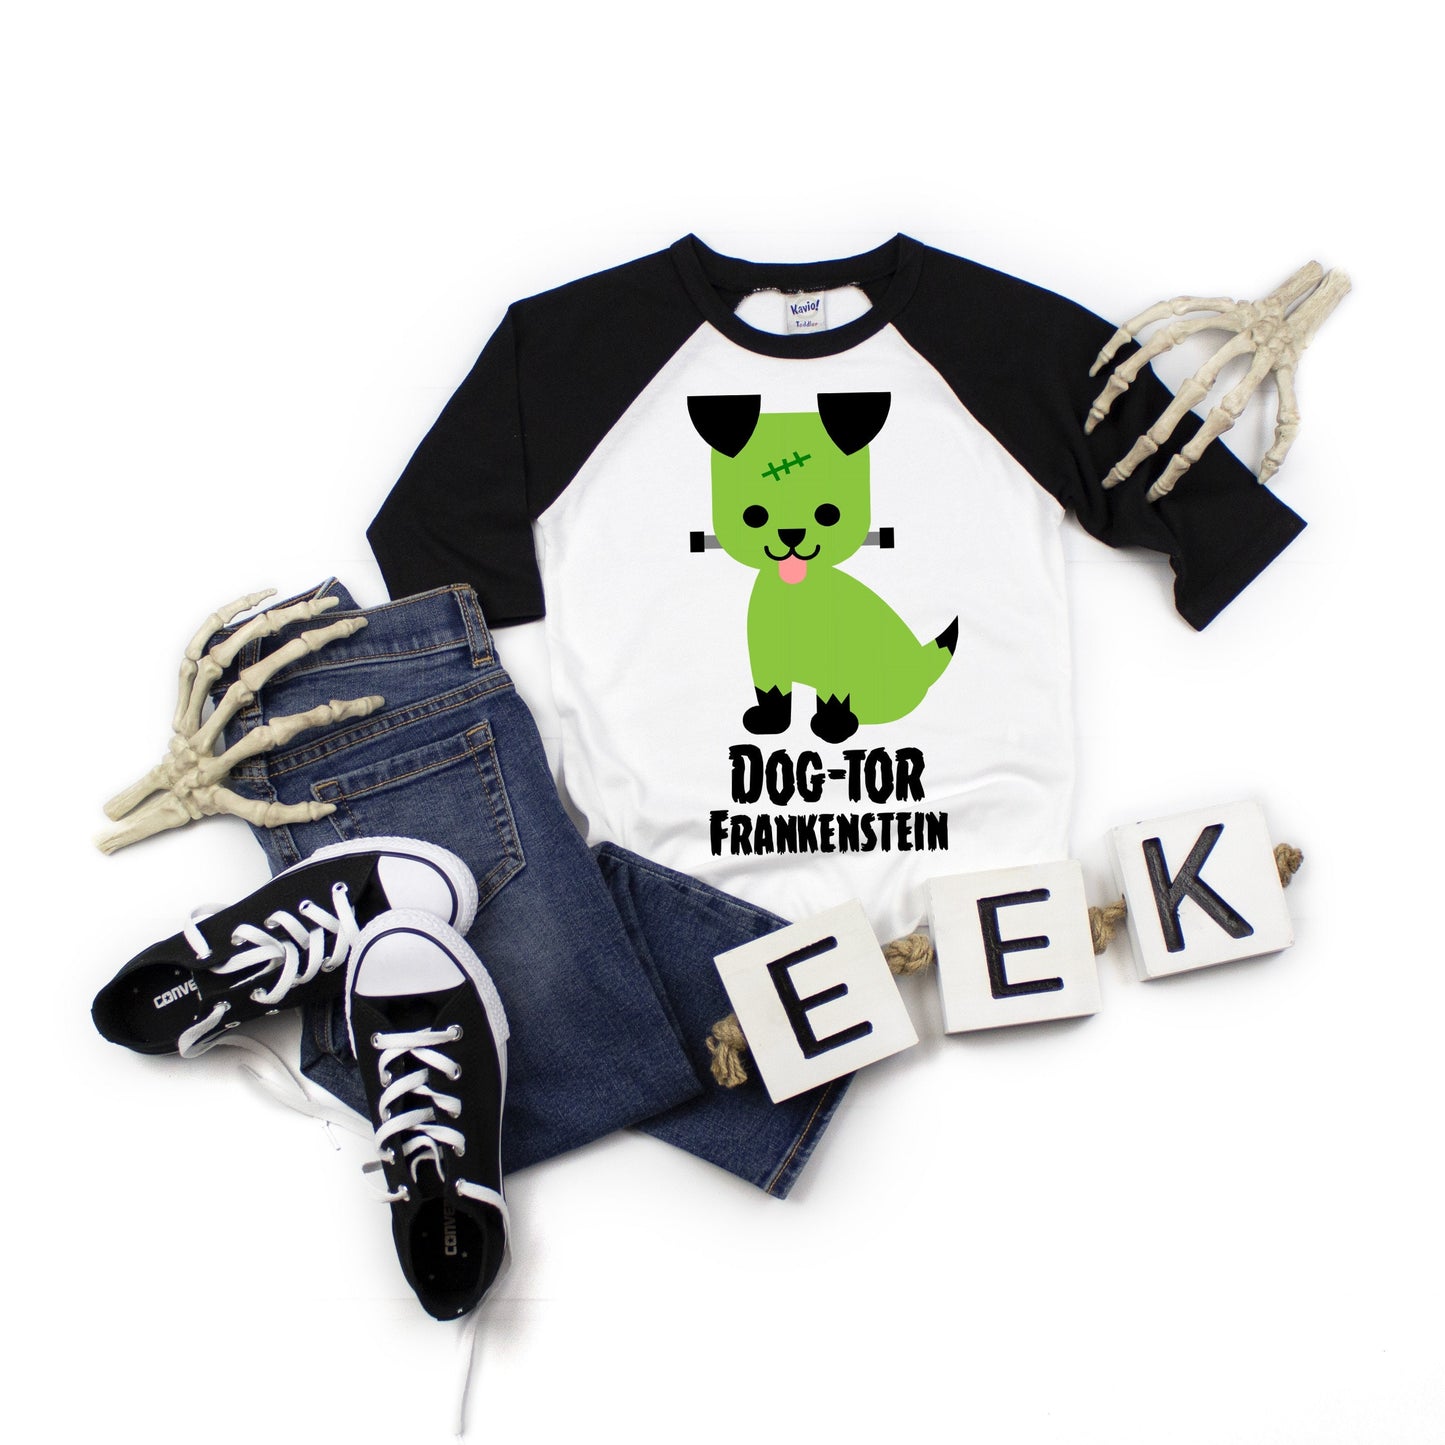 Dog-tor Frankenstein Infant, Toddler or Kids Halloween Raglan Tee - boys halloween shirt - boys frankenstein shirt - kids fall shirt